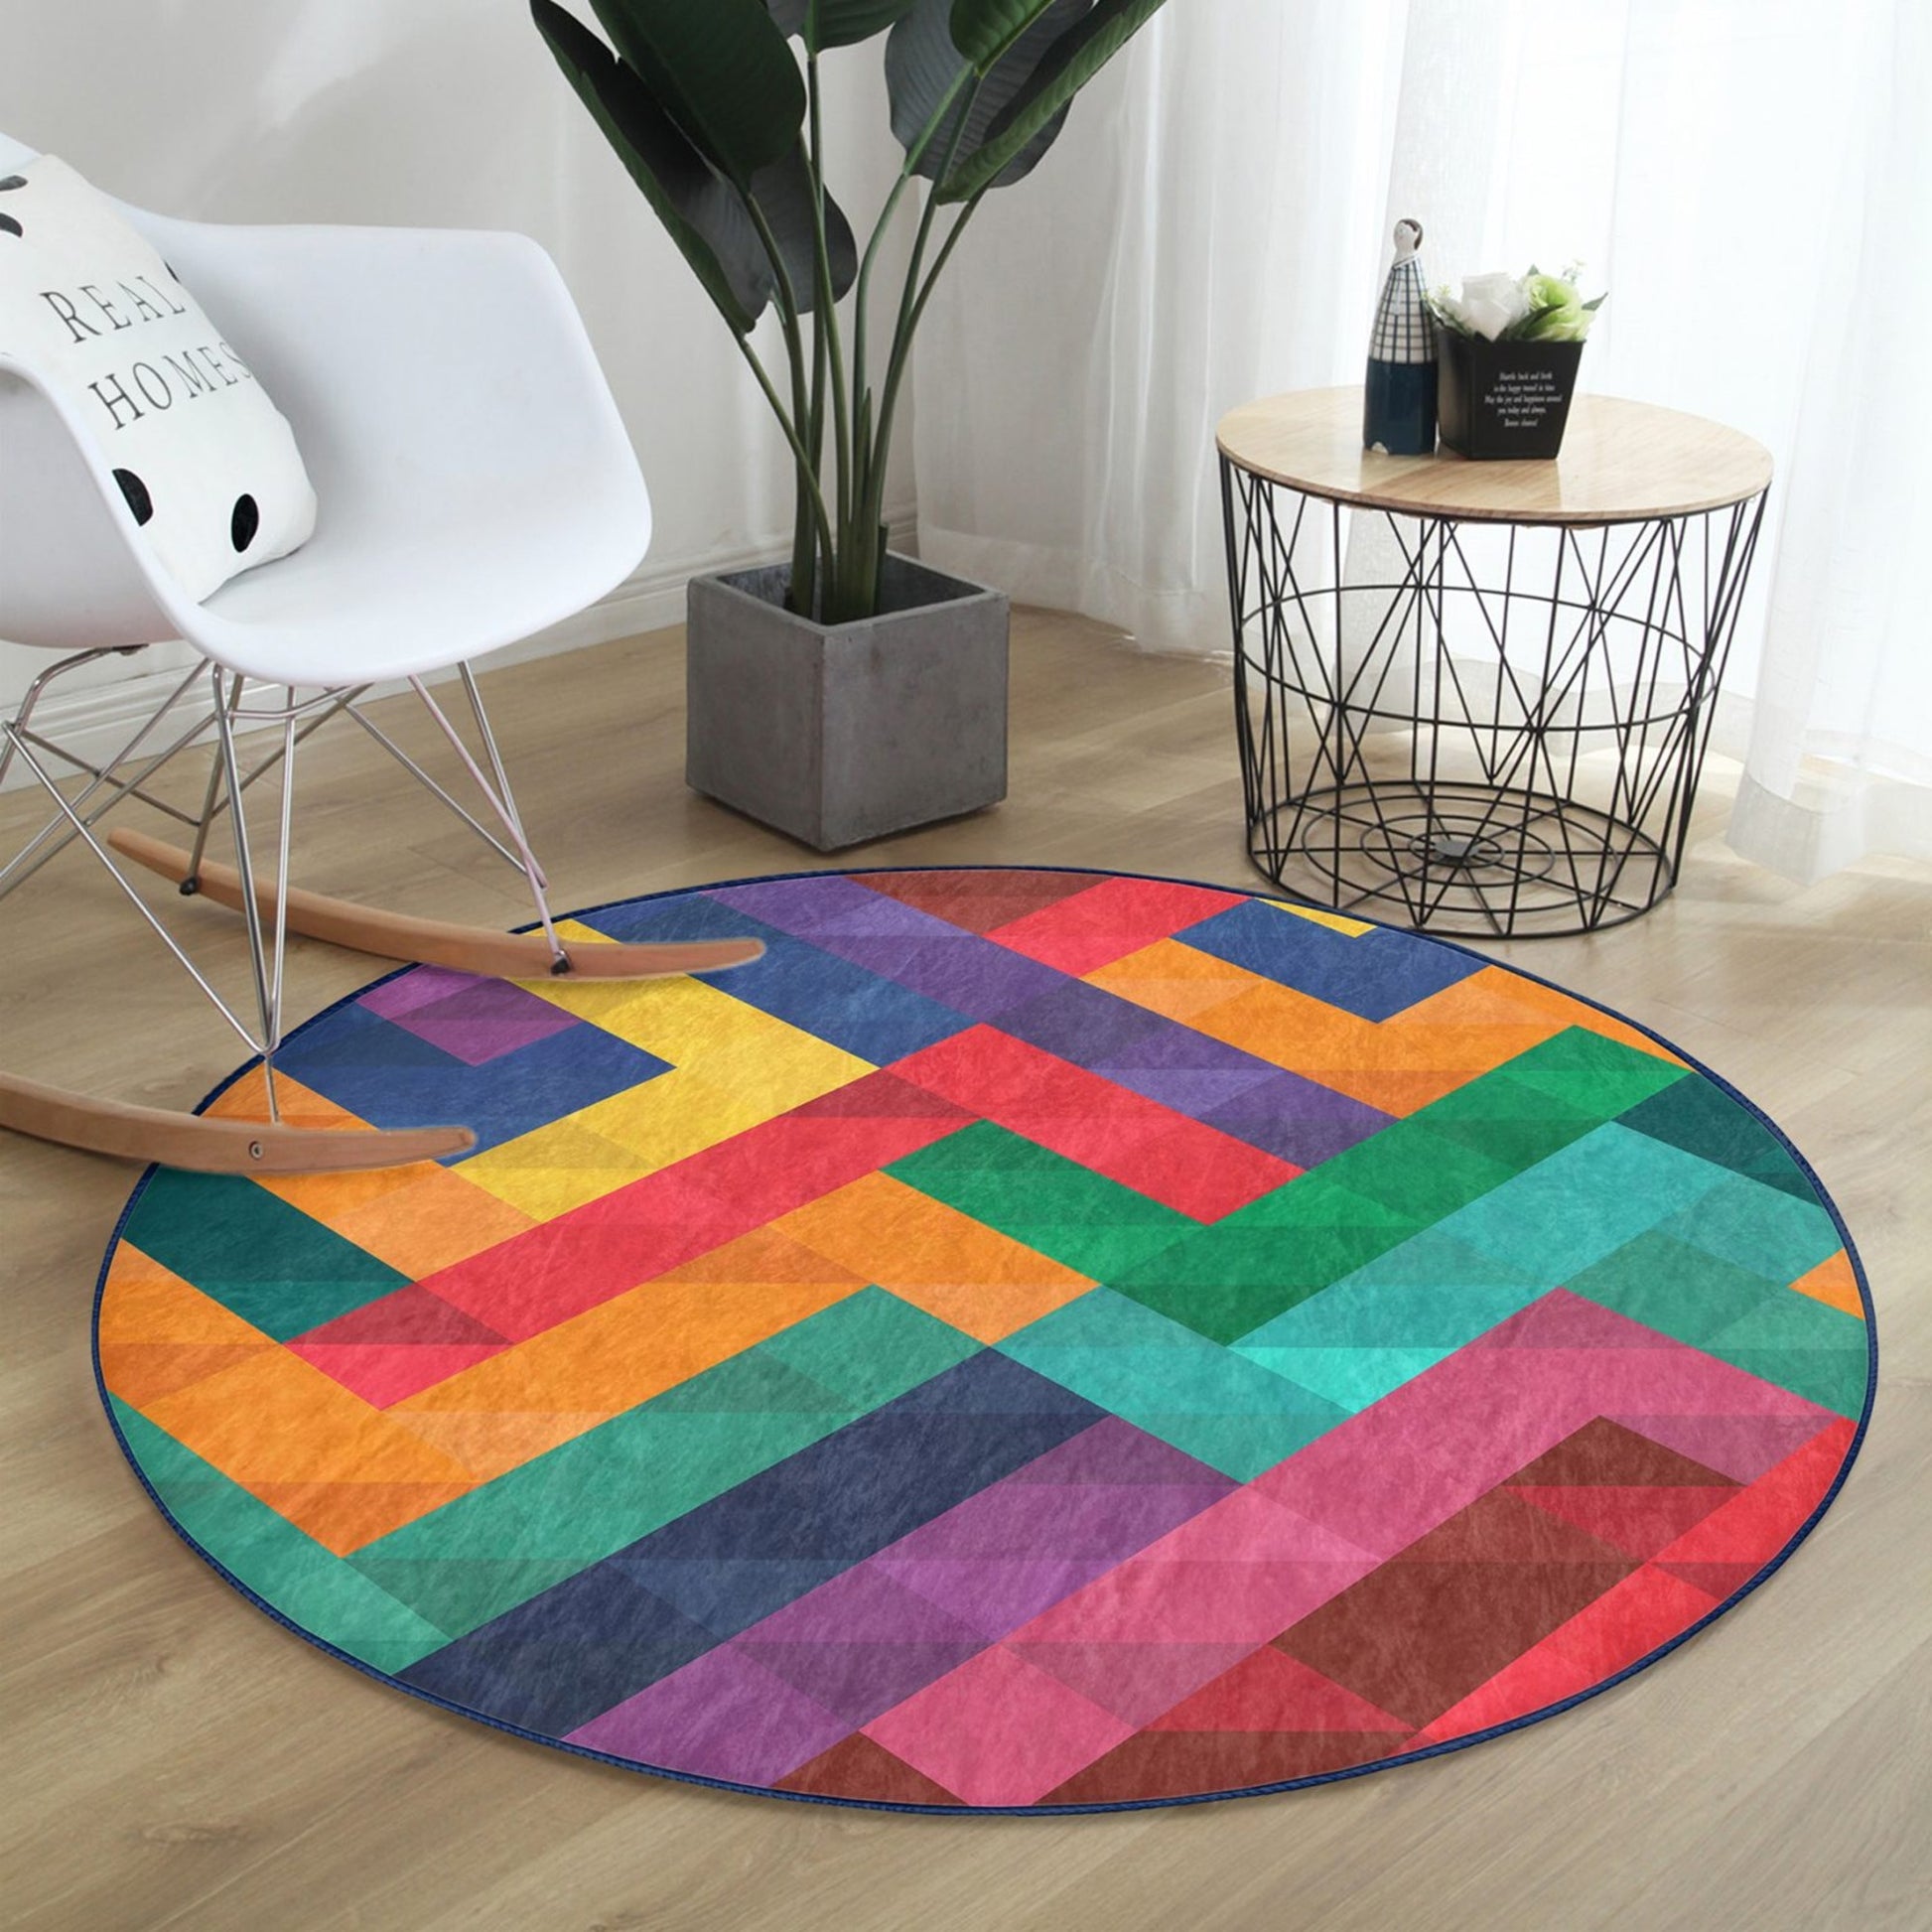 Soft & Durable Homeezone Rug - Colorful Decor